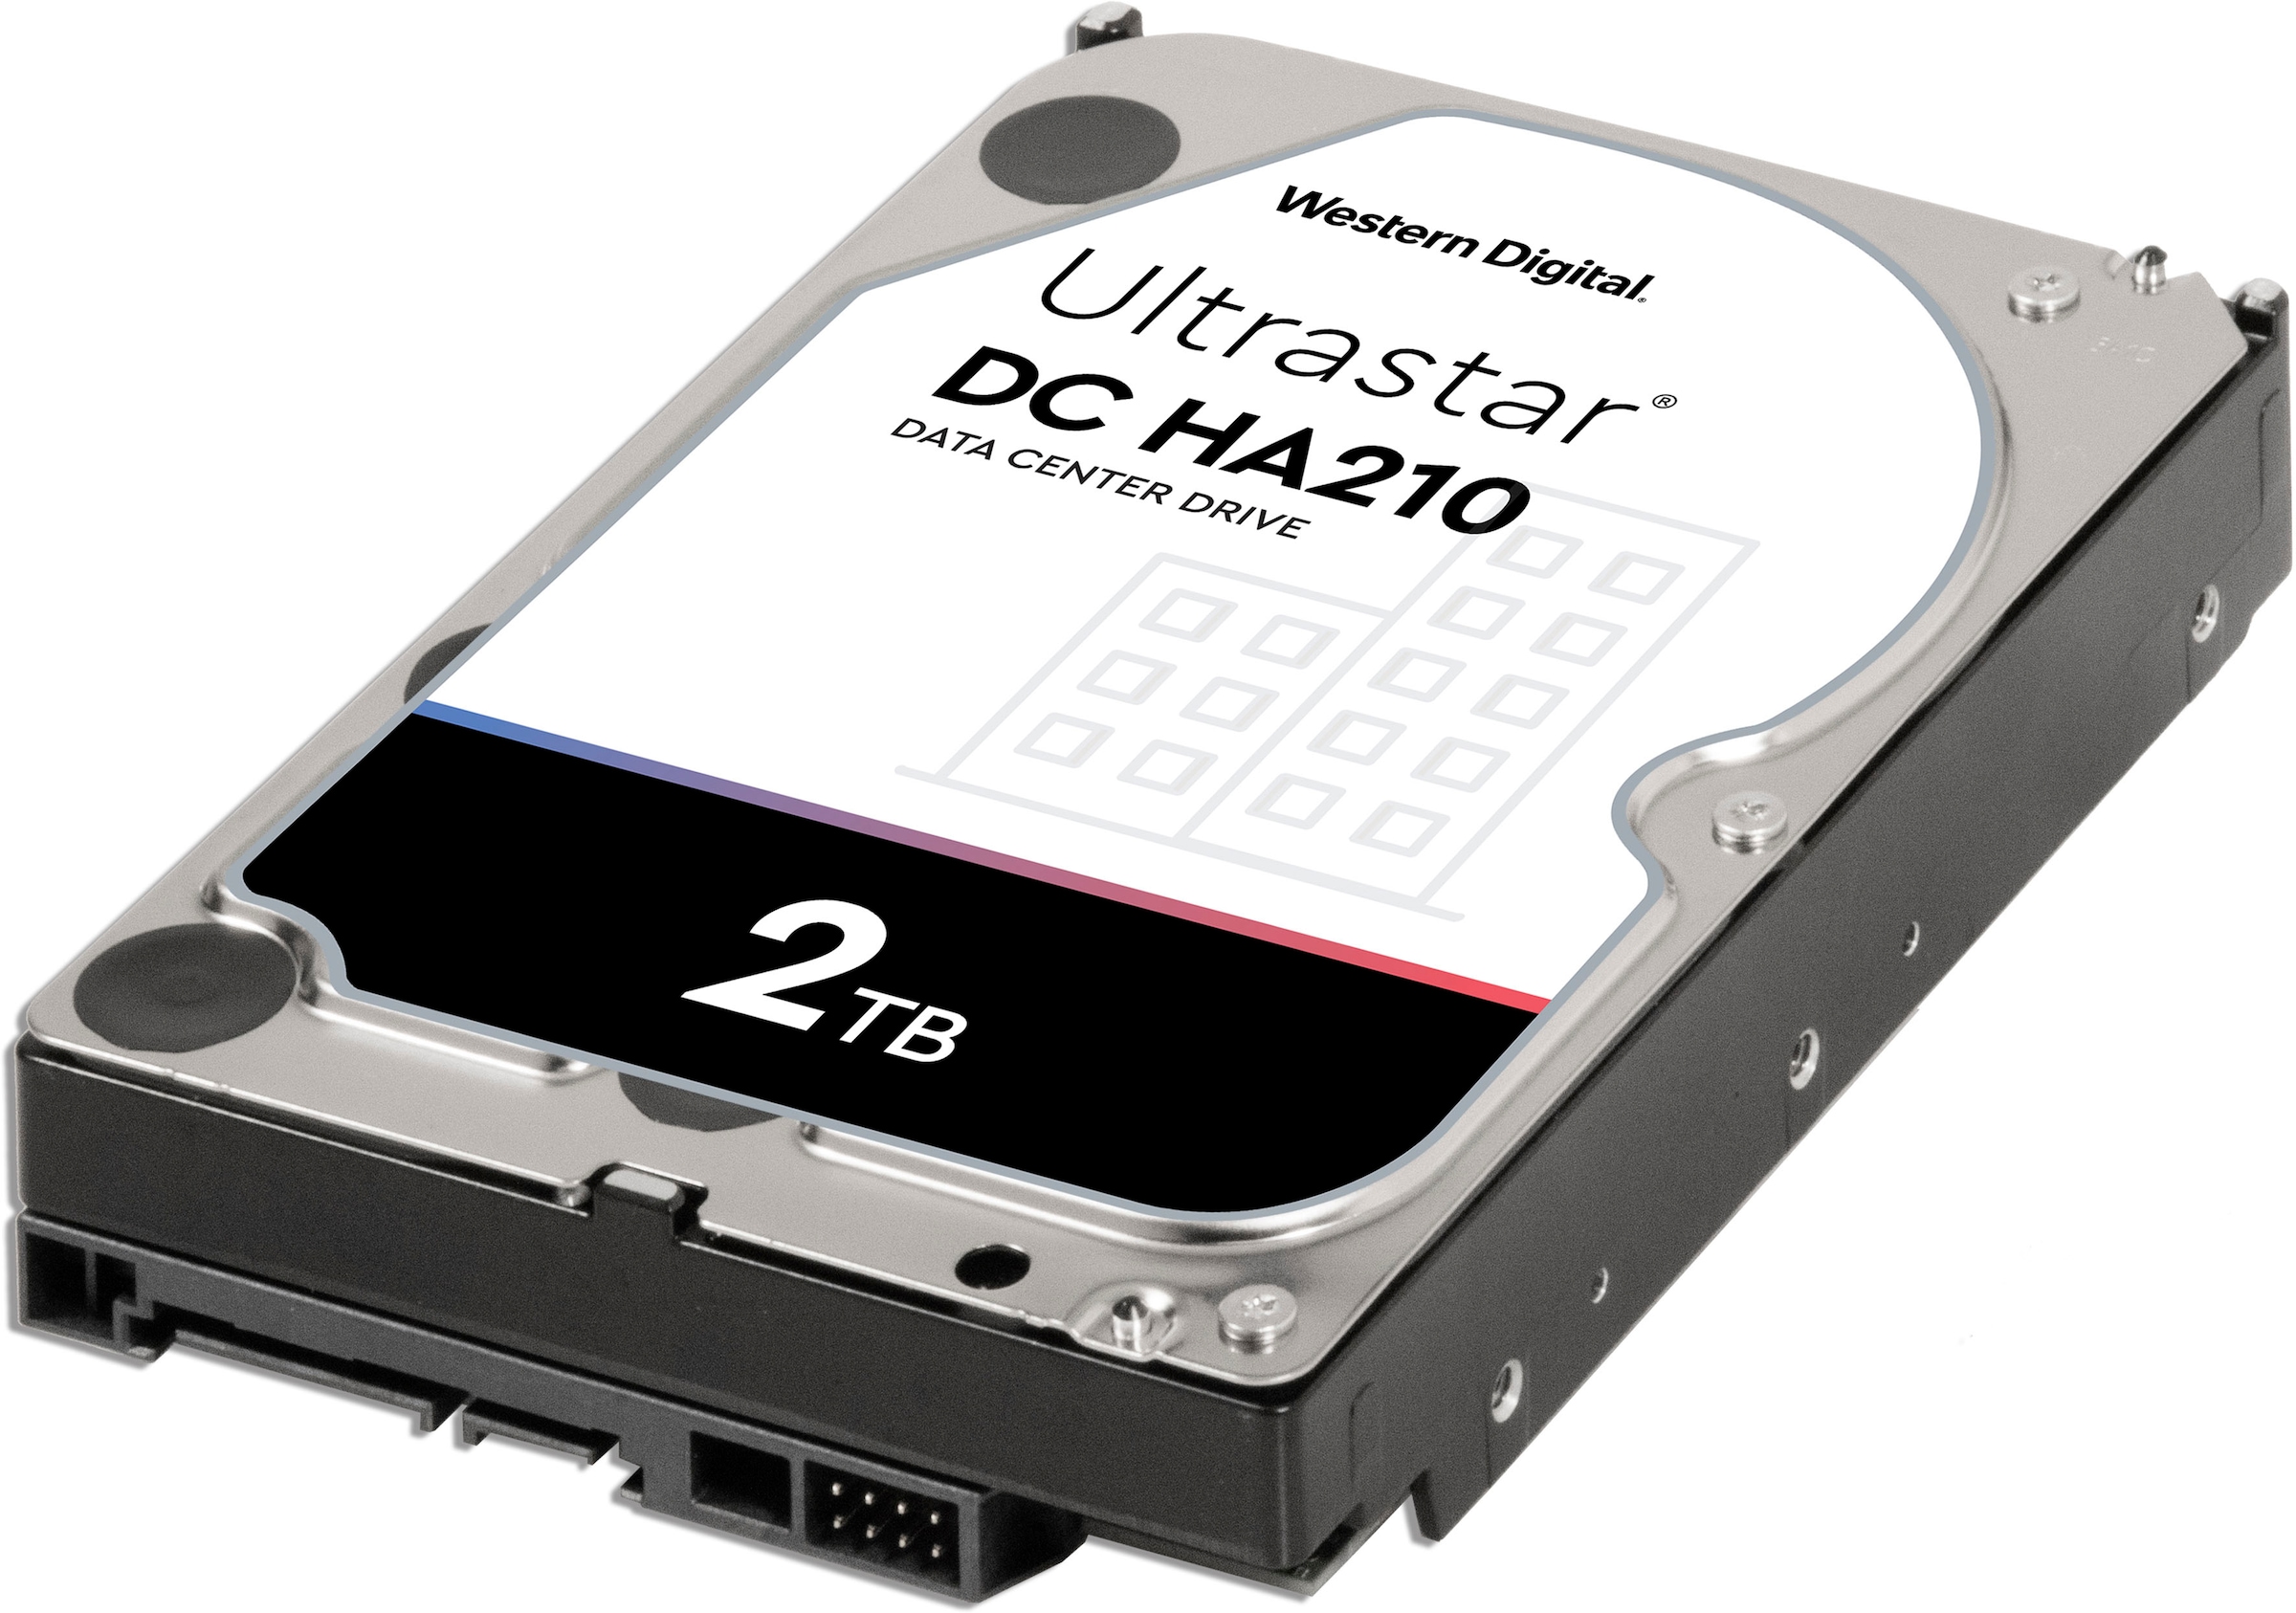 Western Digital HDD-Festplatte »Ultrastar DC HA210 2TB«, 3,5 Zoll, Anschluss SATA, Bulk